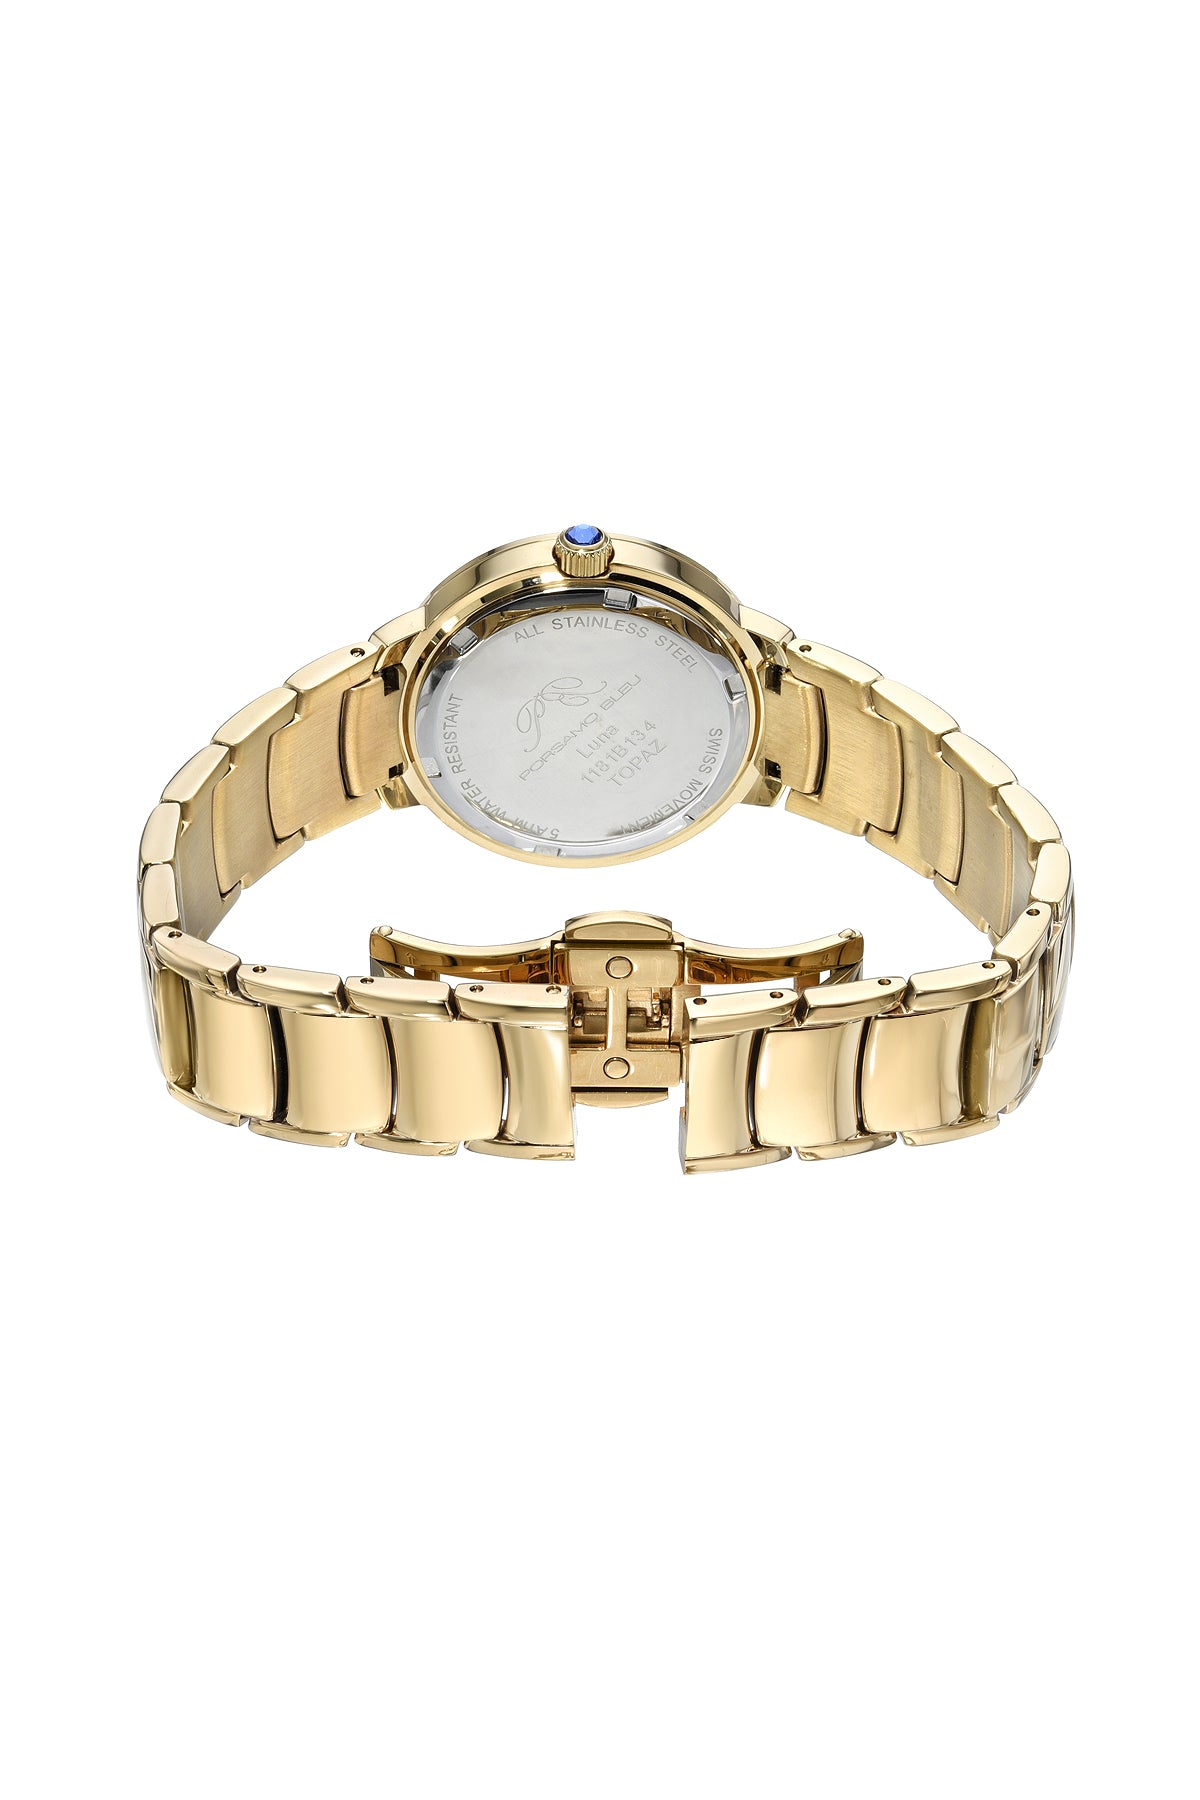 Porsamo Bleu Luna Luxury Topaz Women's Stainless Steel Watch, Gold, White With Flinque Guilloche Dial 1181BLUS